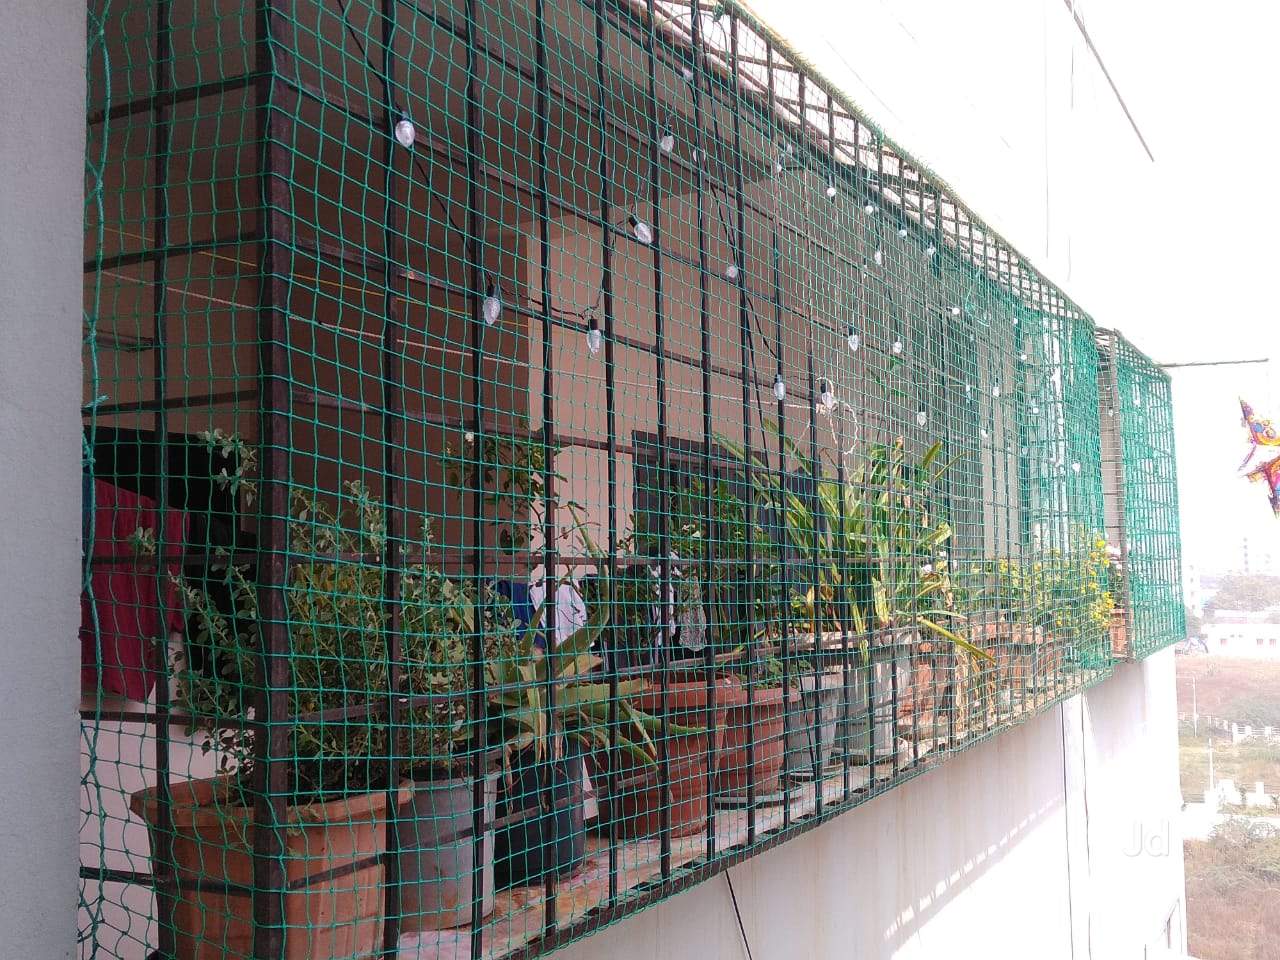 Anti Bird Nets in chennai